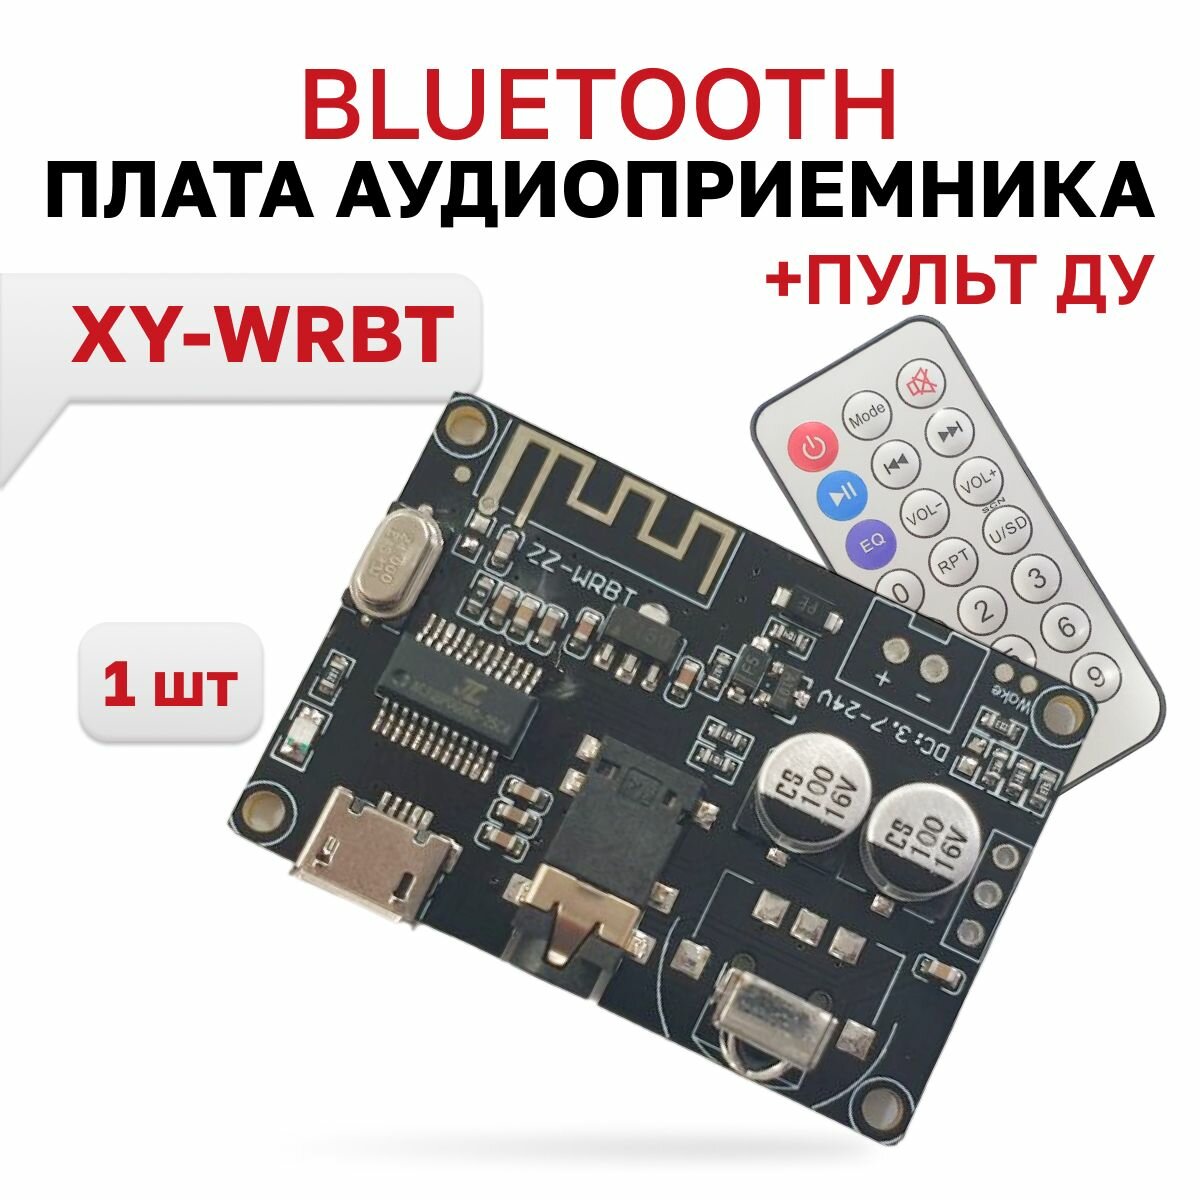 Модуль MP3 Bluetooth (XY-WRBT) Bluetooth приемник, декодер, плата, пульт ду, 1 шт.